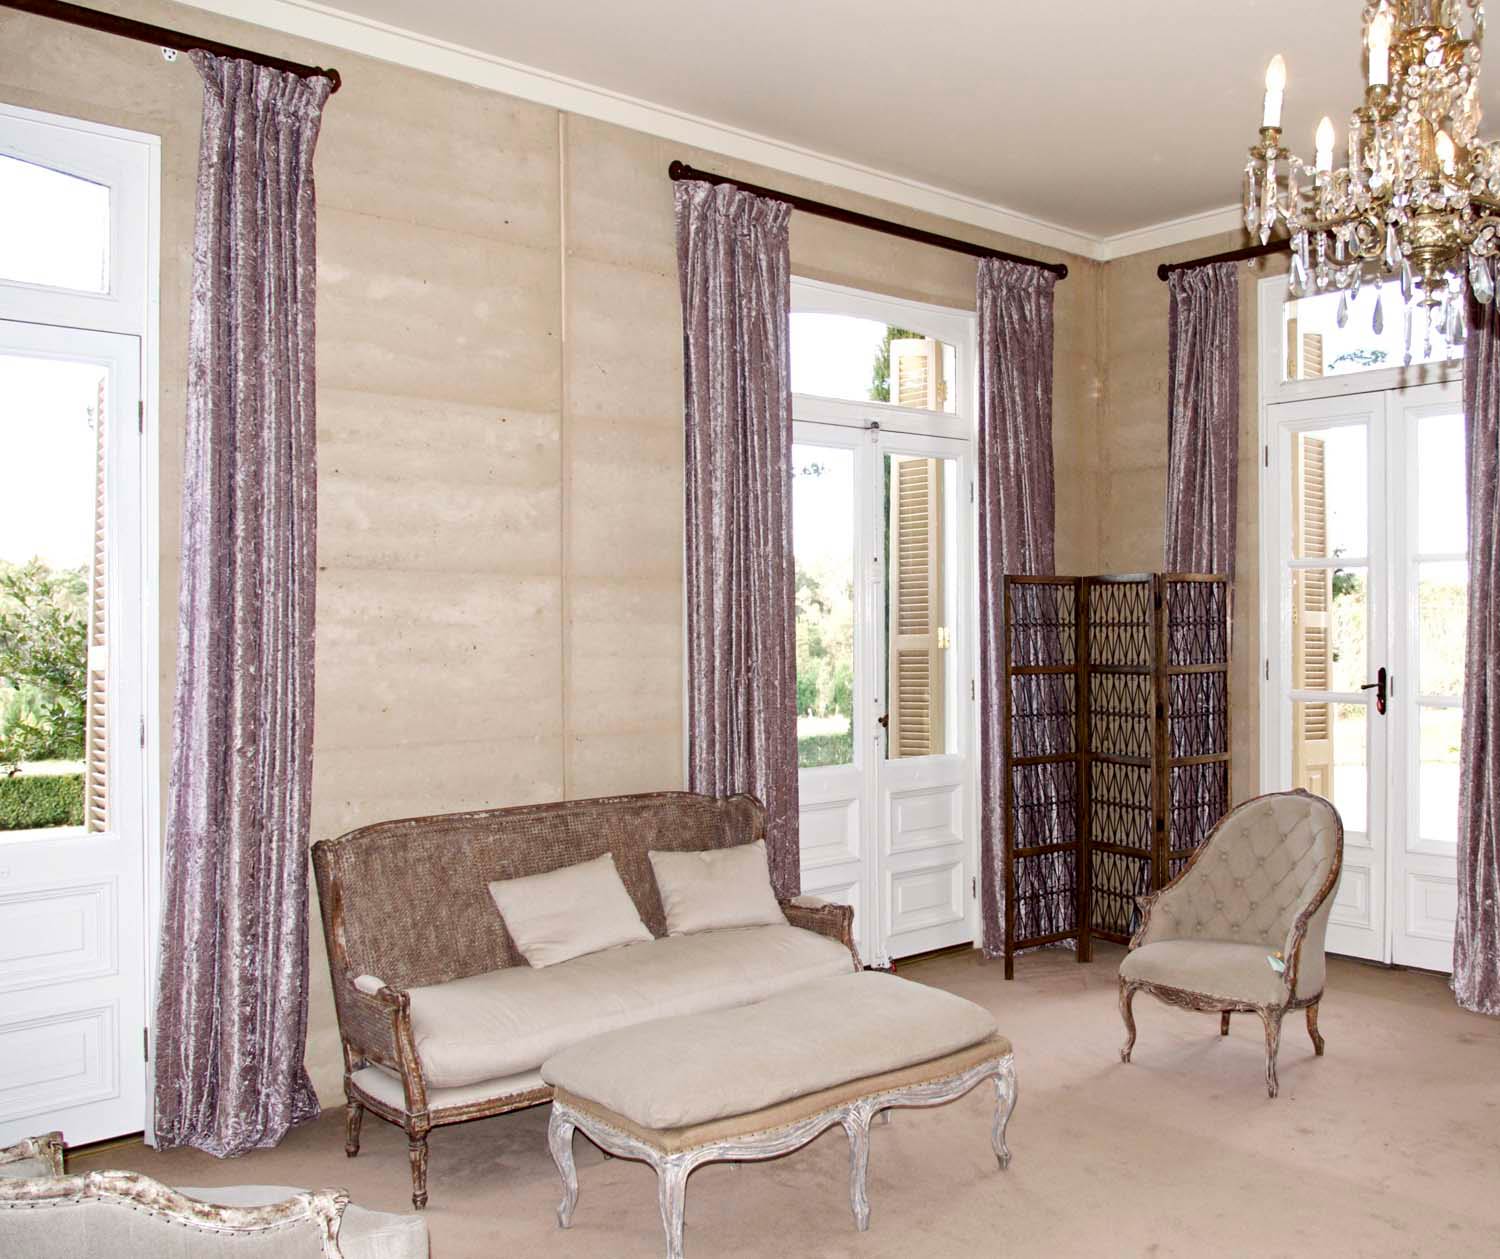 4 French Manor interiors